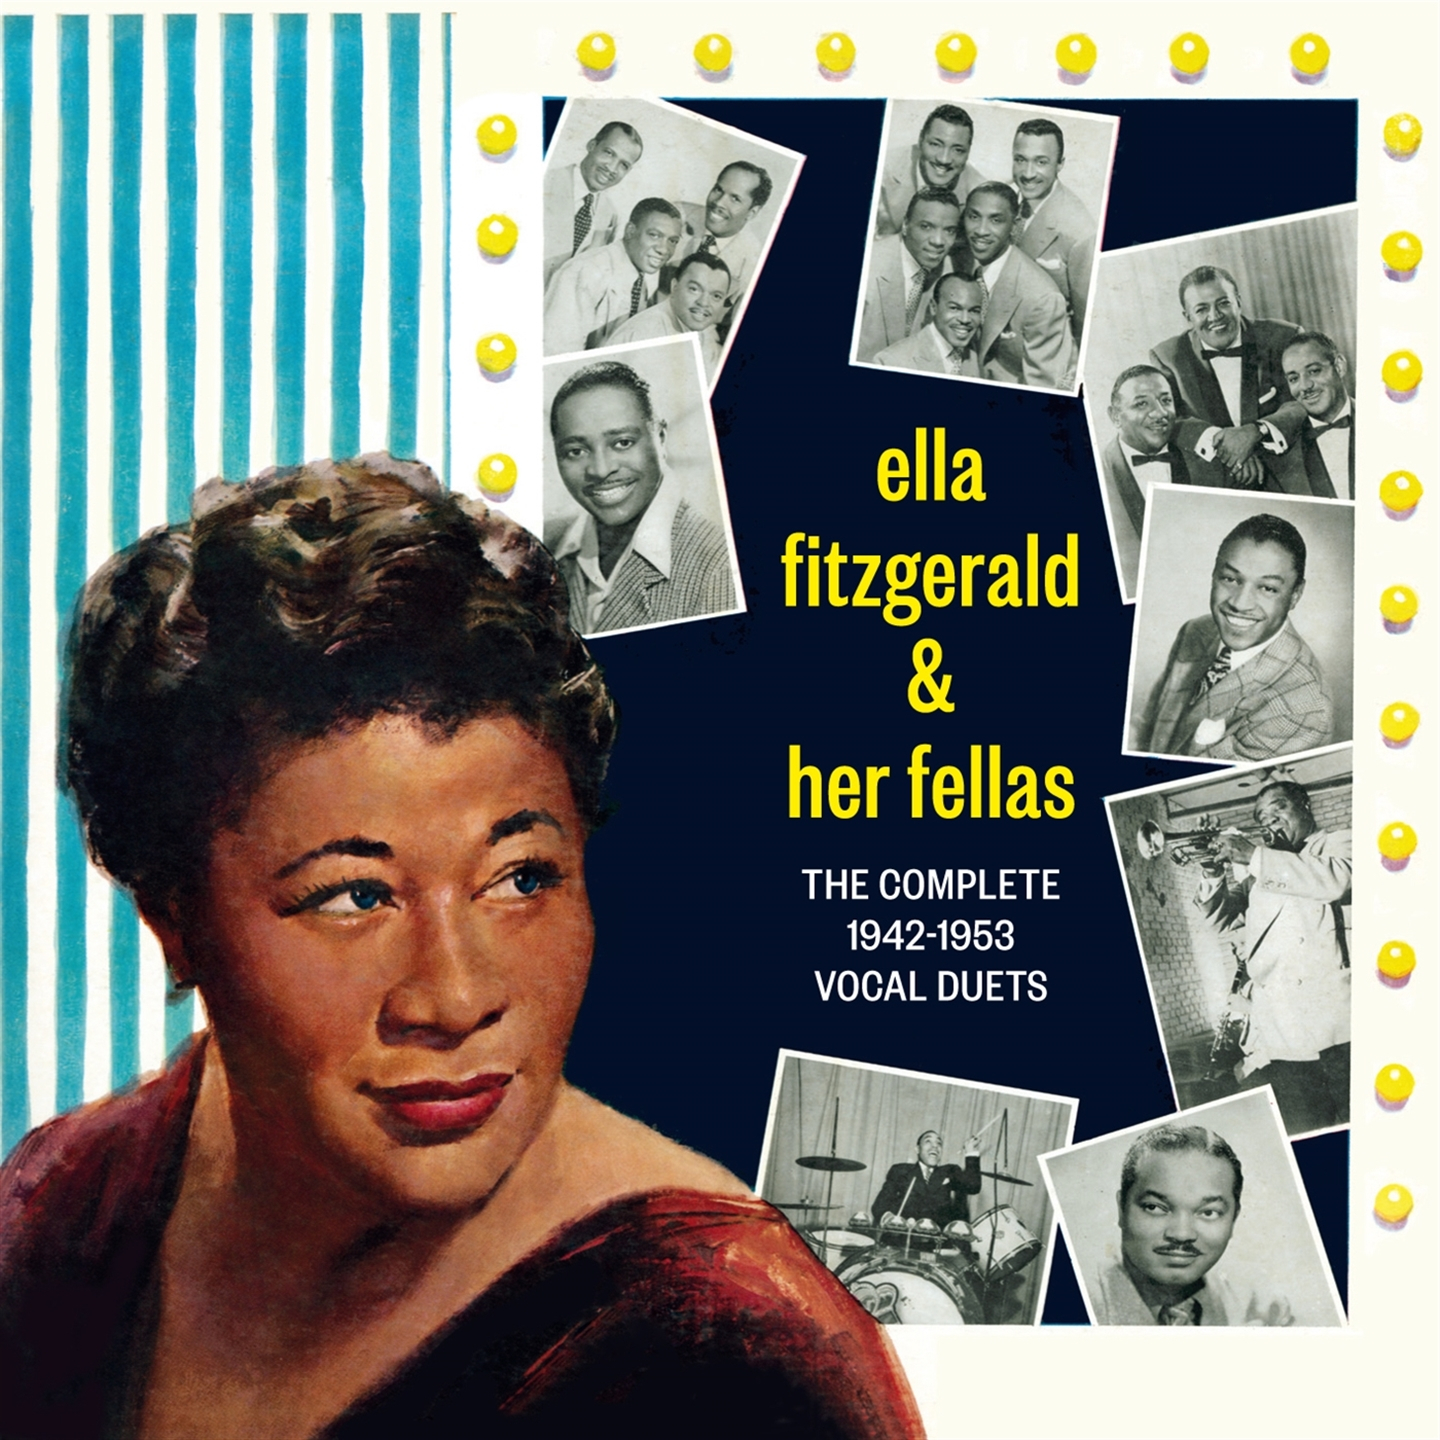 ELLA FITZGERALD & HER FELLAS - THE COMPLETE 1942-1953 VOCAL DUETS